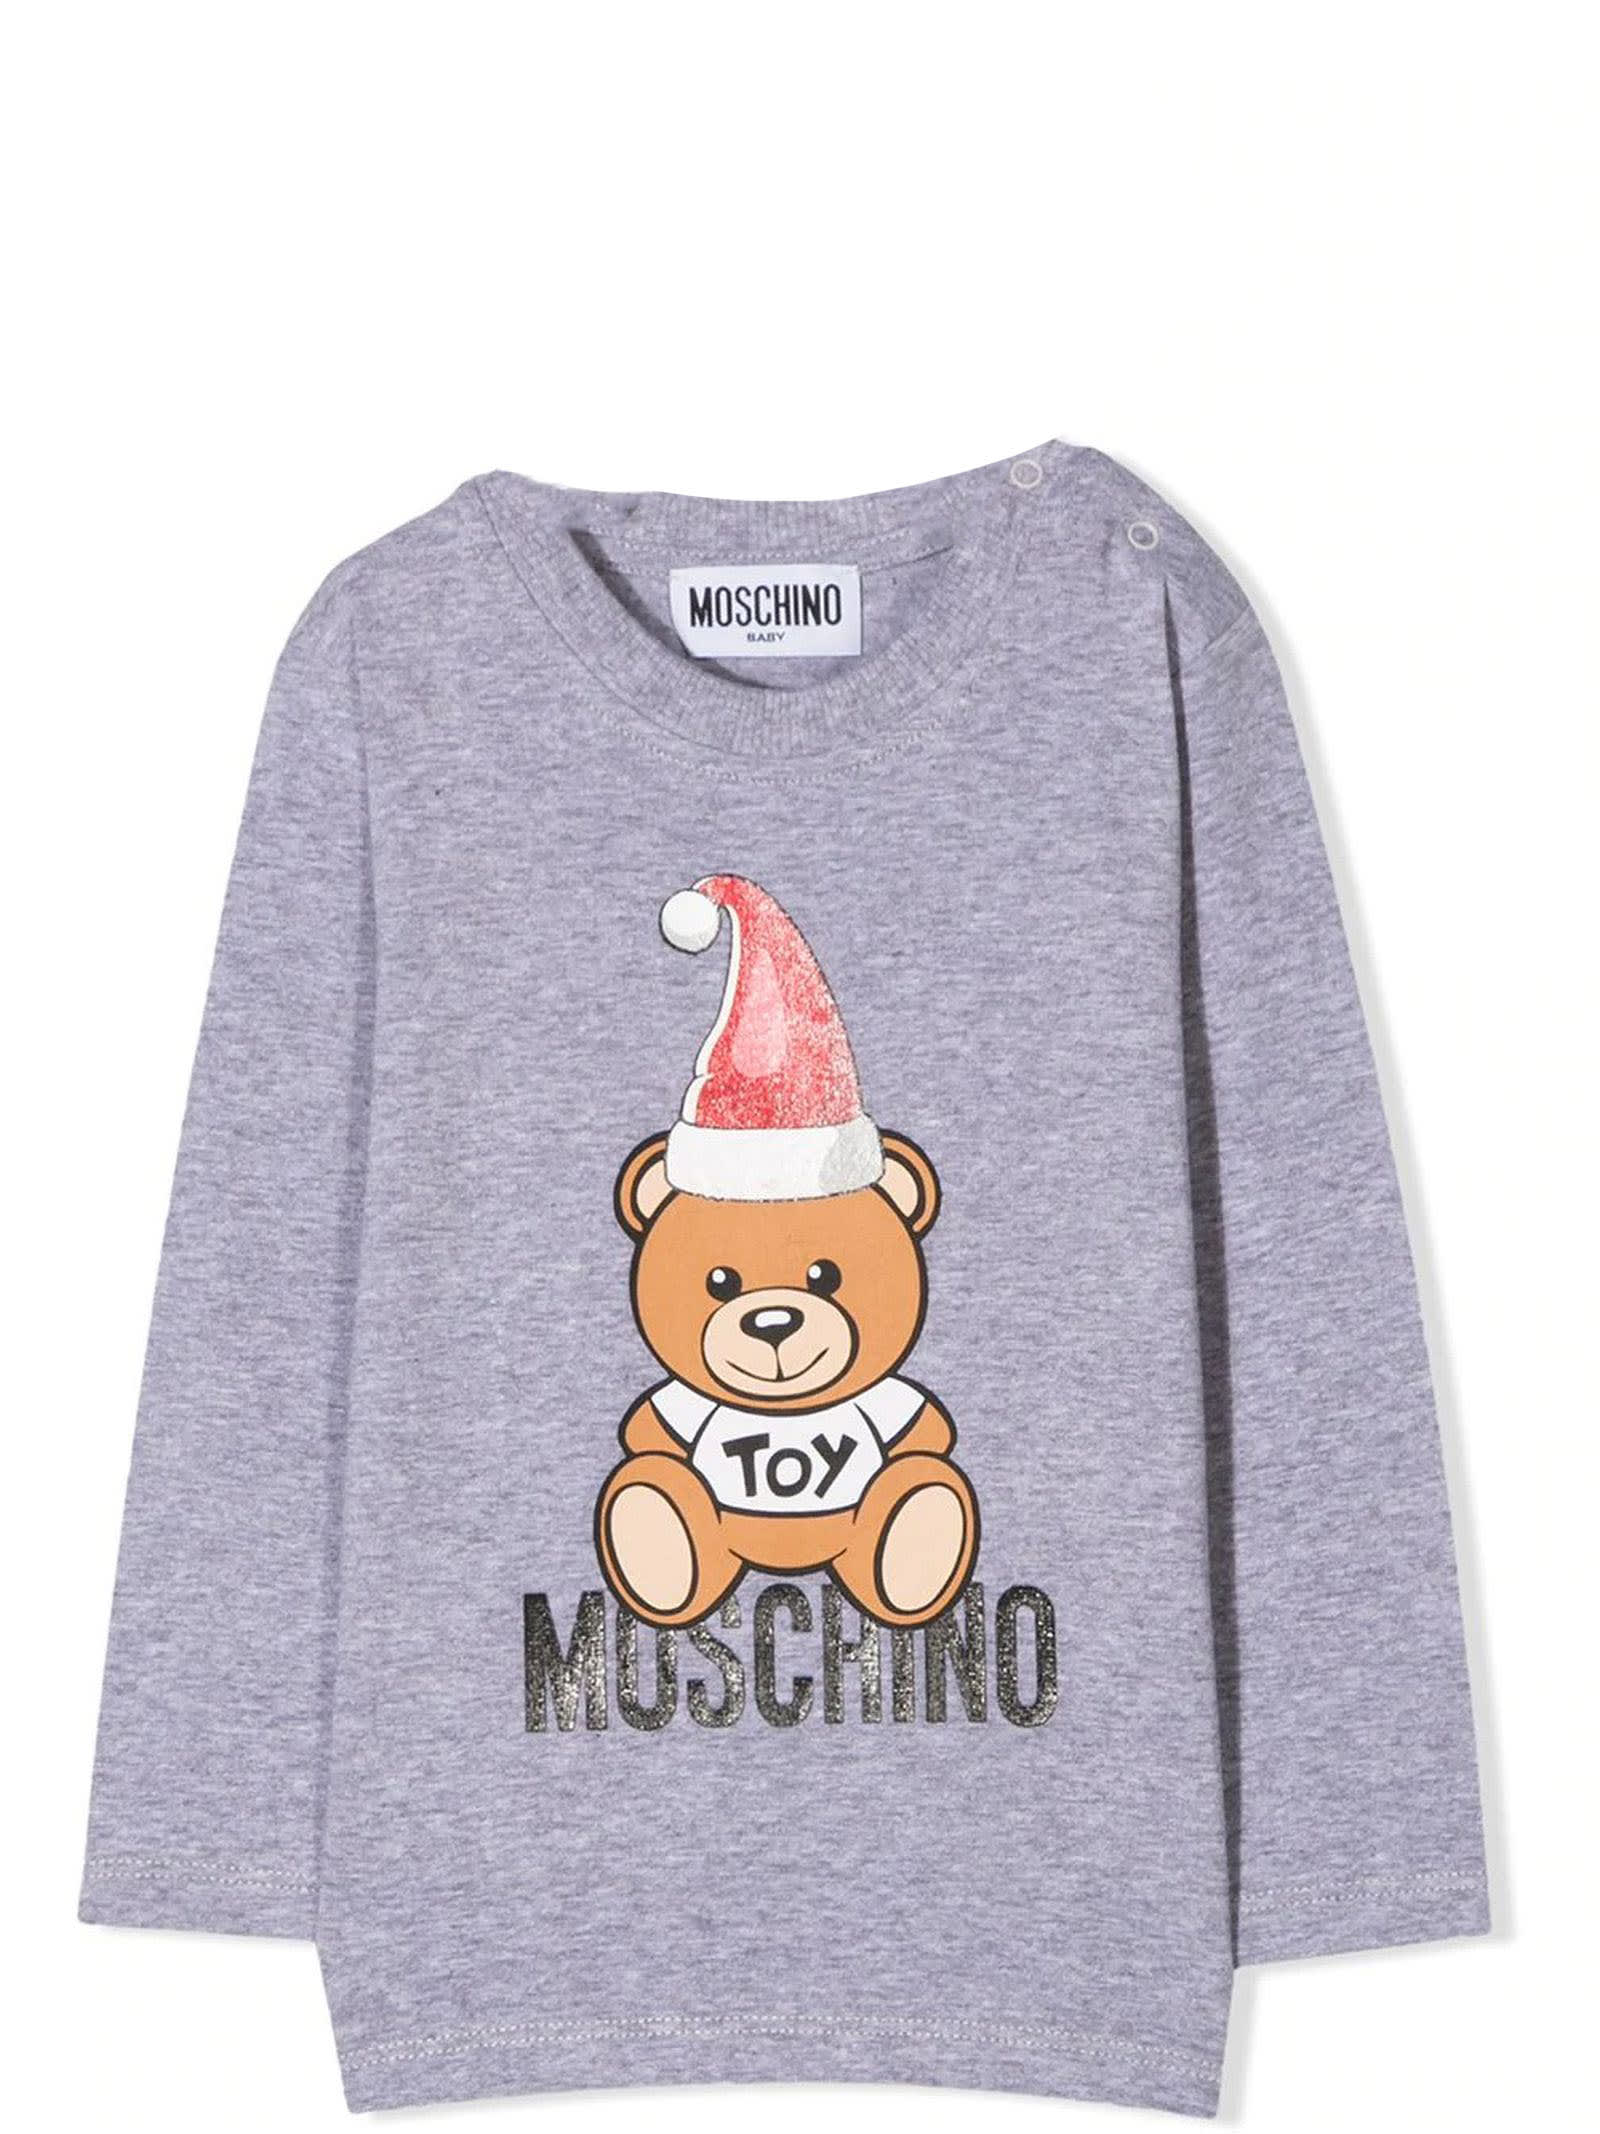 Moschino Grey Cotton Toy Bear T-shirt